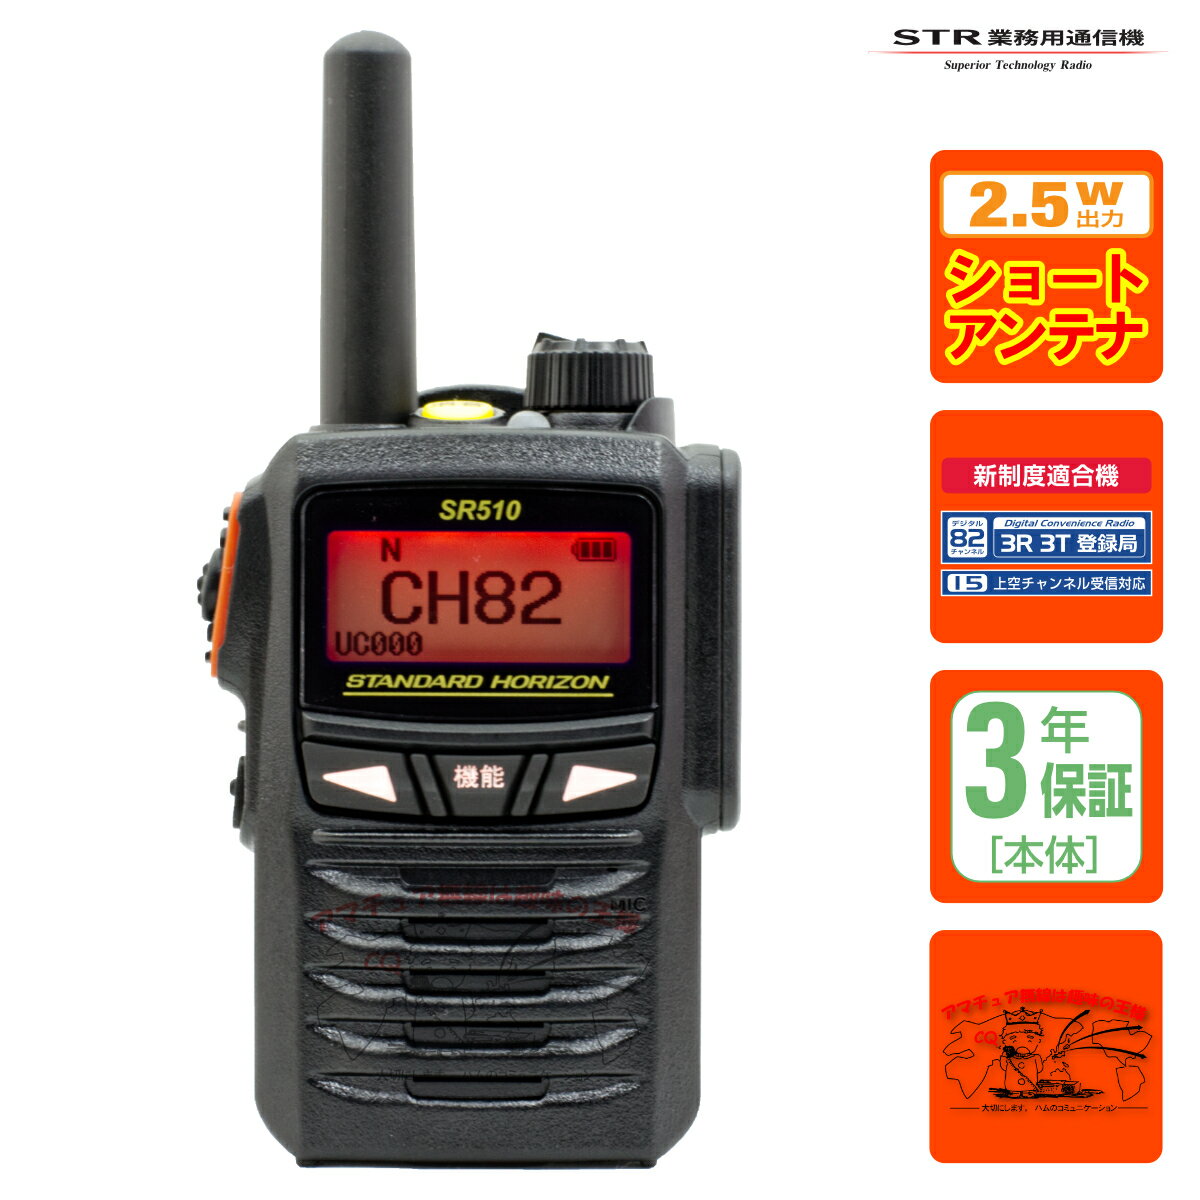 SR510+純正ショートアンテナ 82ch増波対応 STR業務用通信機 携帯型2.5W デジタルトランシーバー